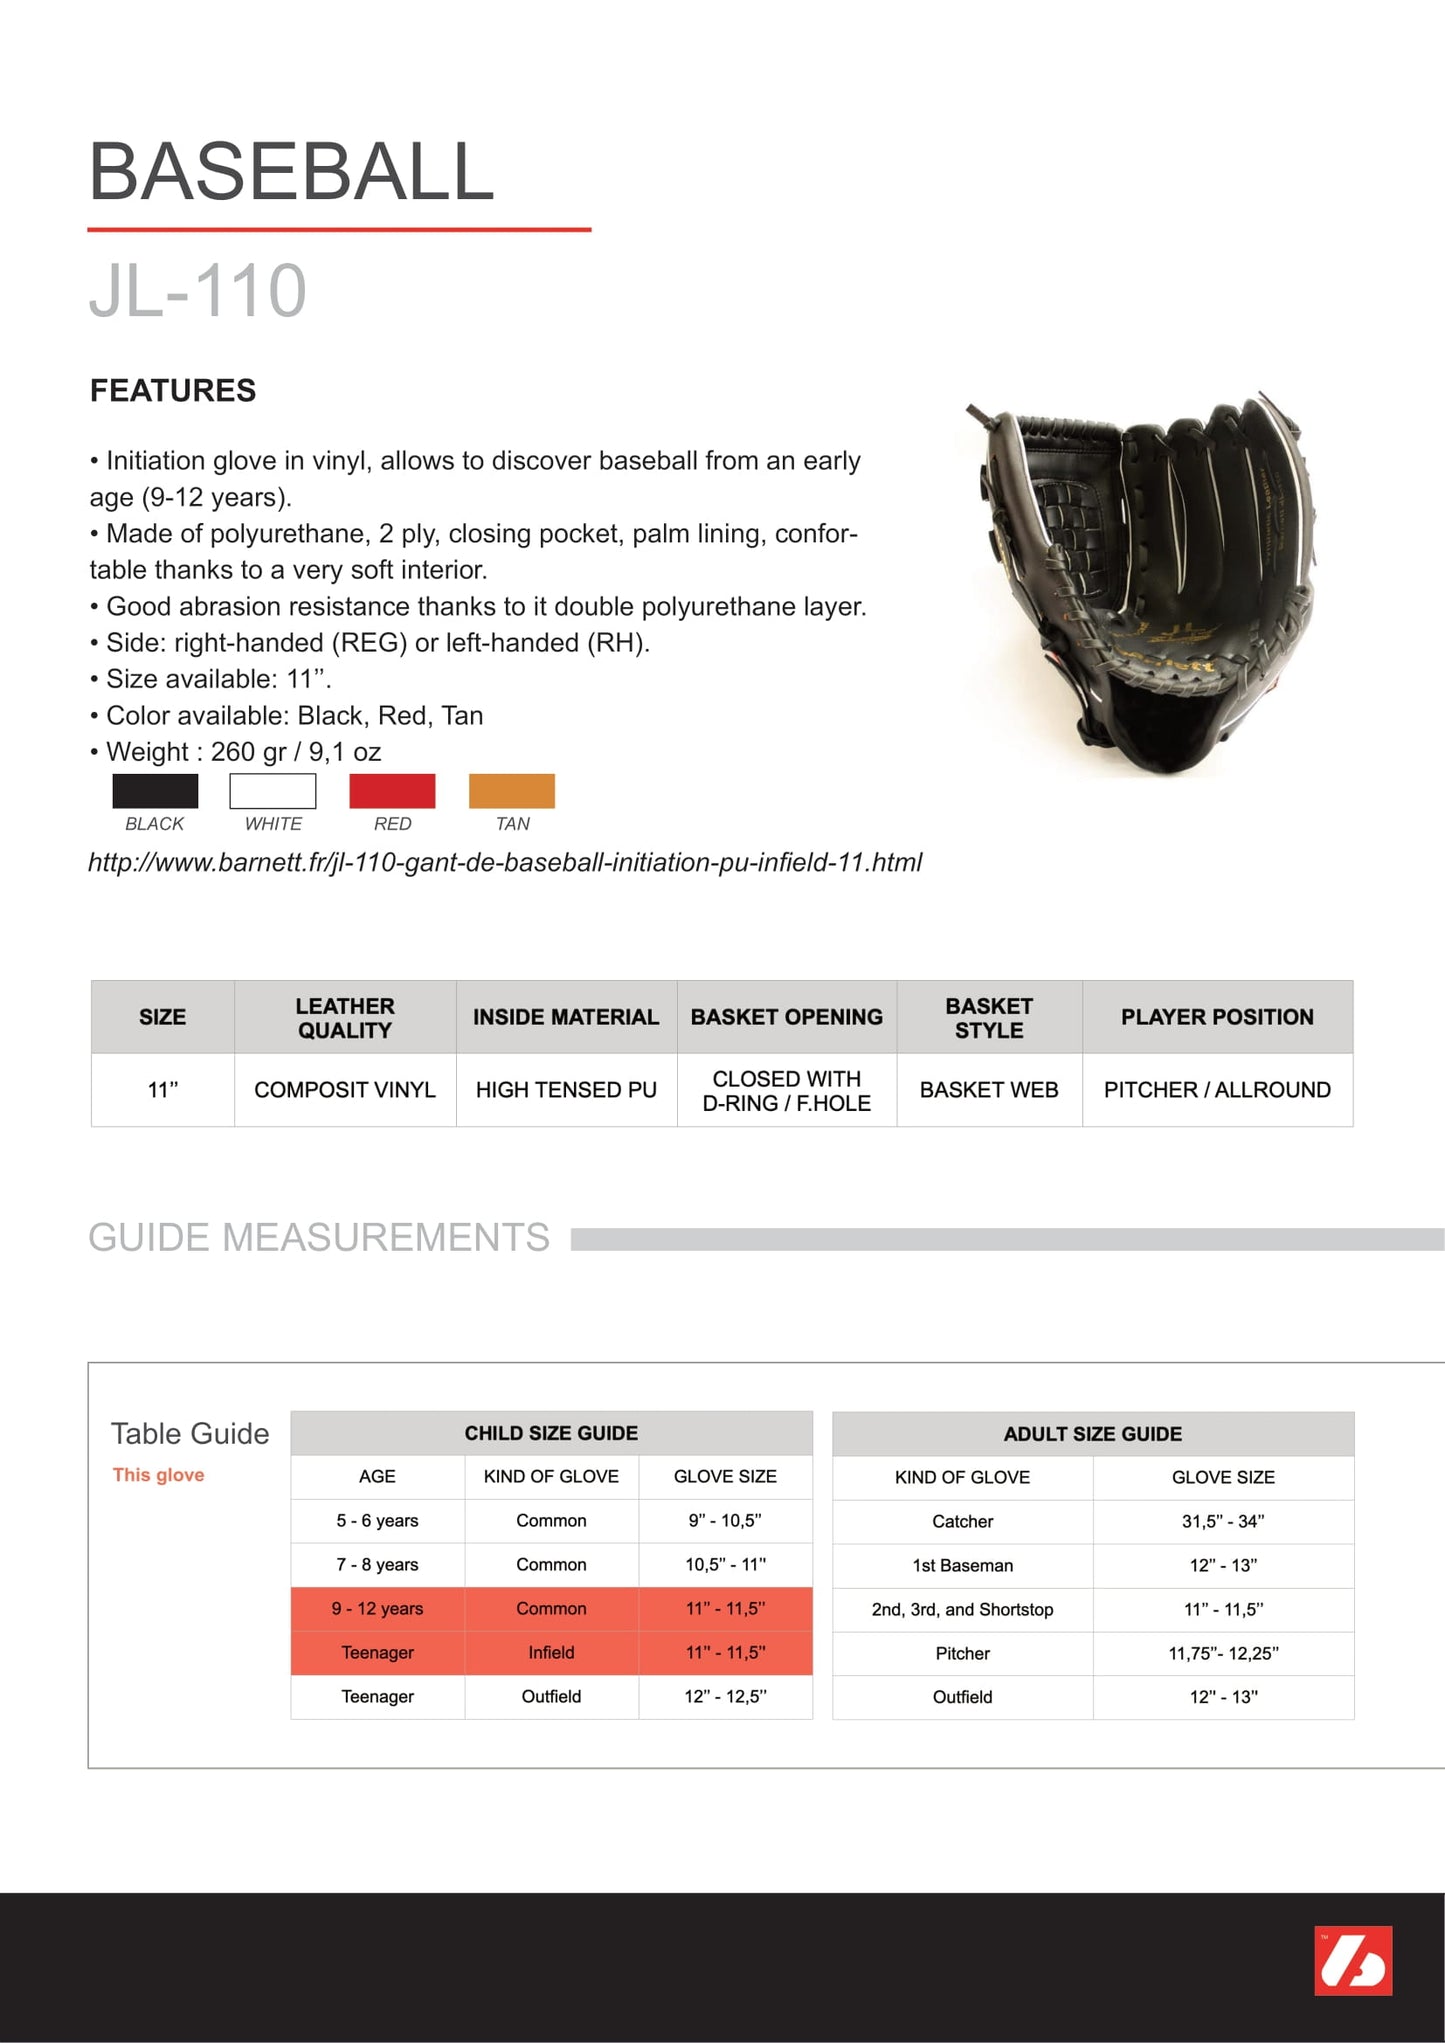 JL-110 Composite baseball glove, Infield, Size 11, Black